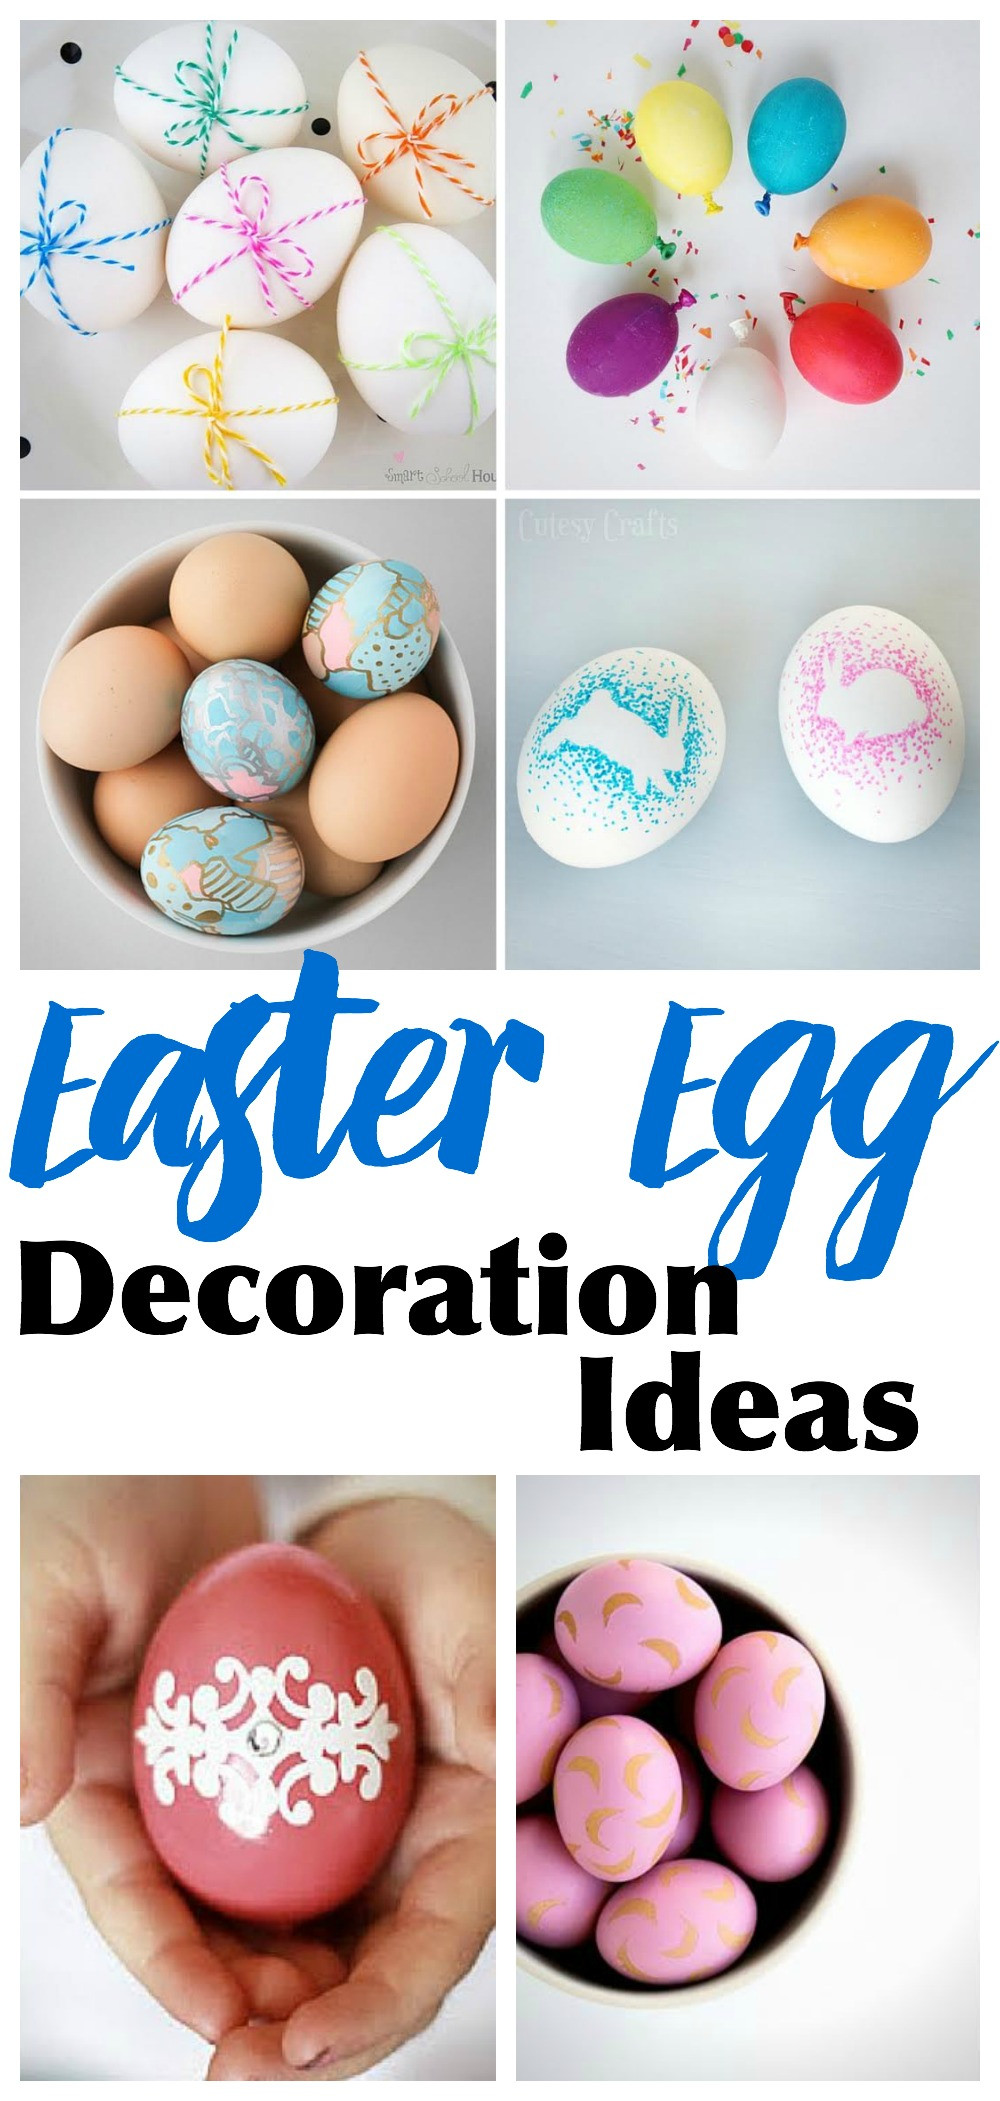 Creative Easter Egg Ideas
 31 Creative Easter Egg Decoration Ideas